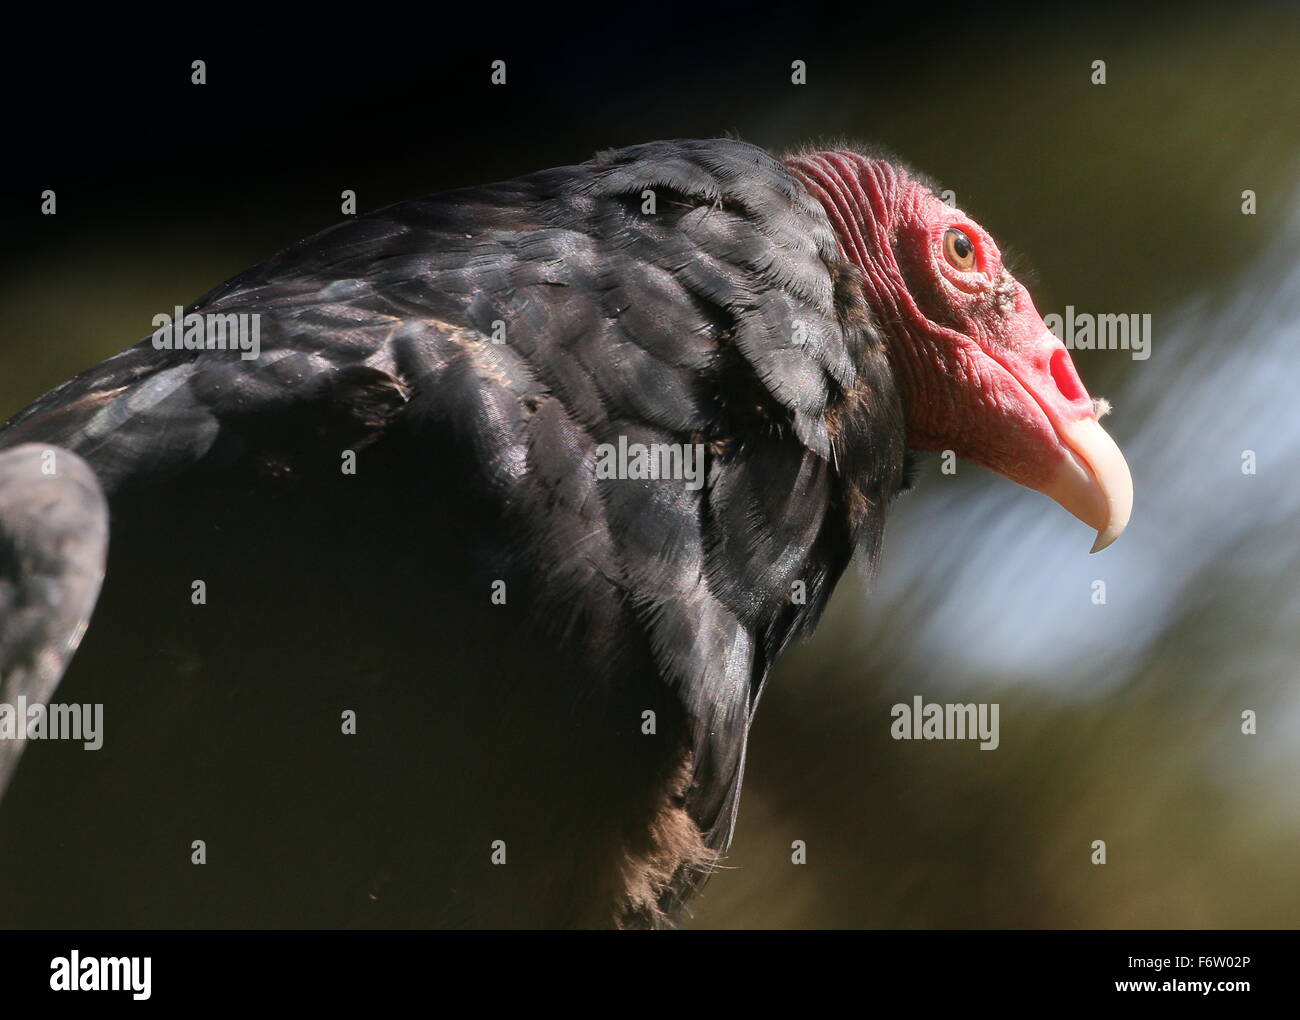 New World Turkey vulture or Turkey buzzard (Cathartes aura), close-up, seen in profile Stock Photo